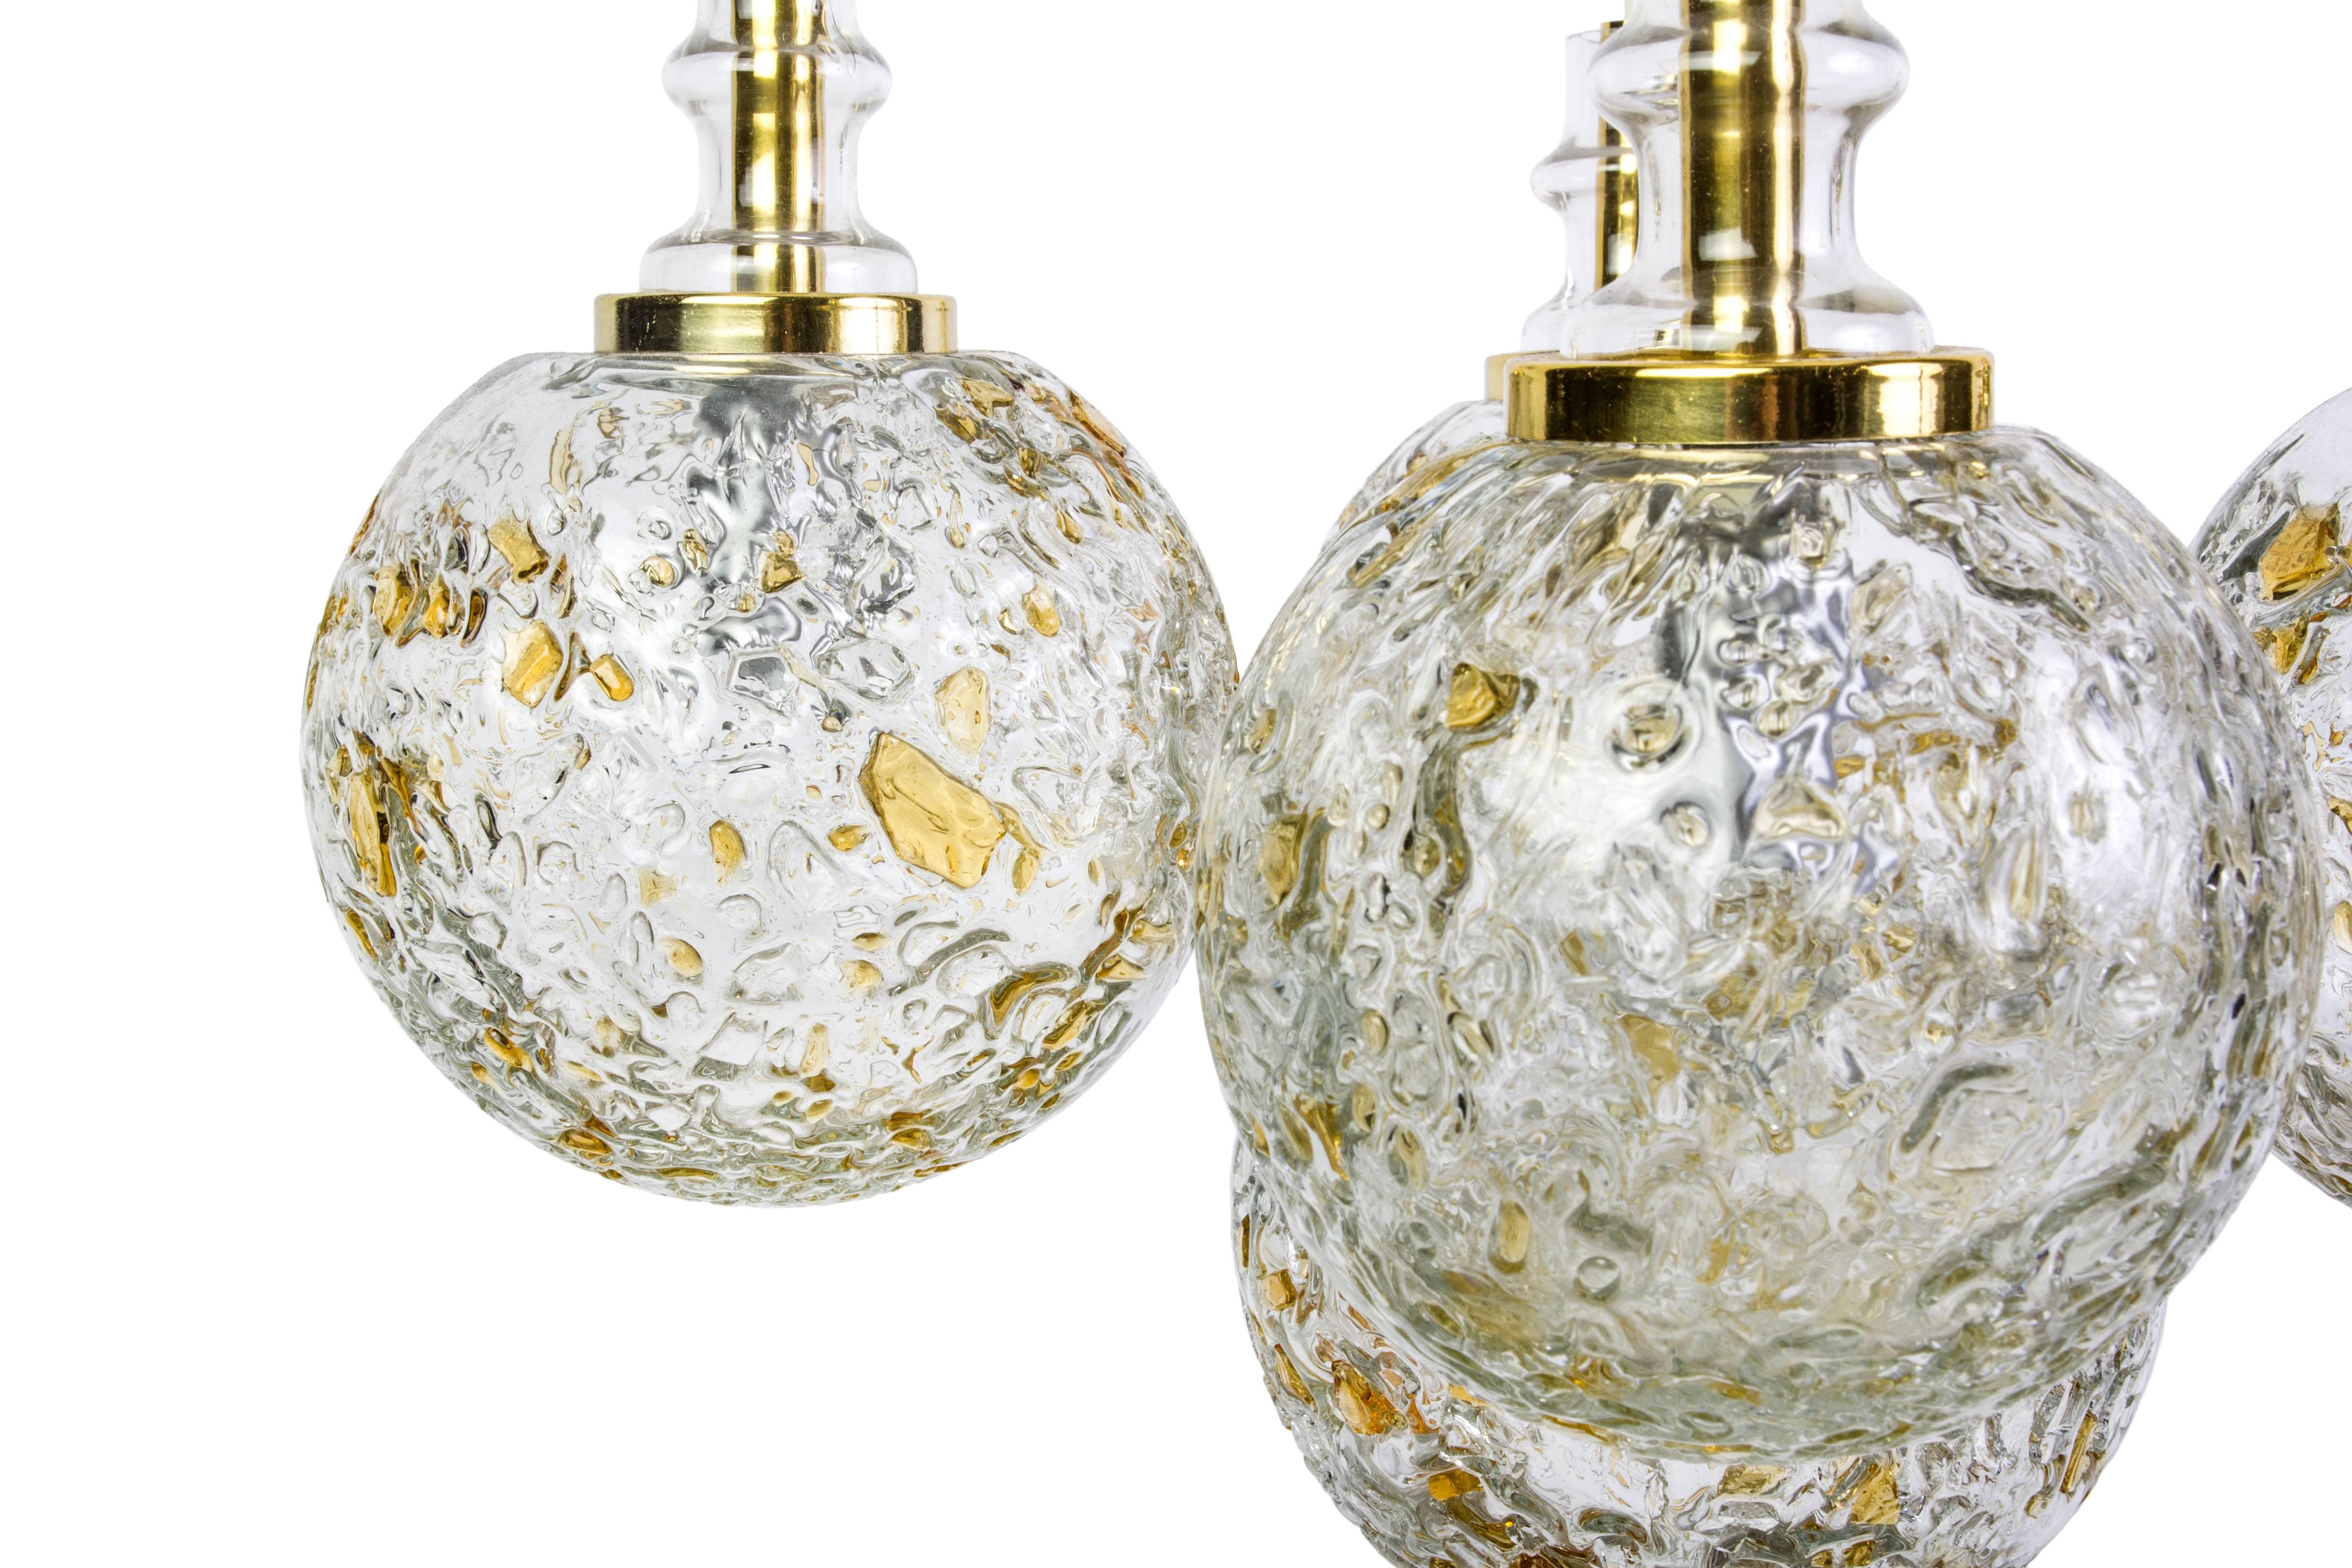 German Superb Glass Balls Ceiling Pendant by Doria For Sale